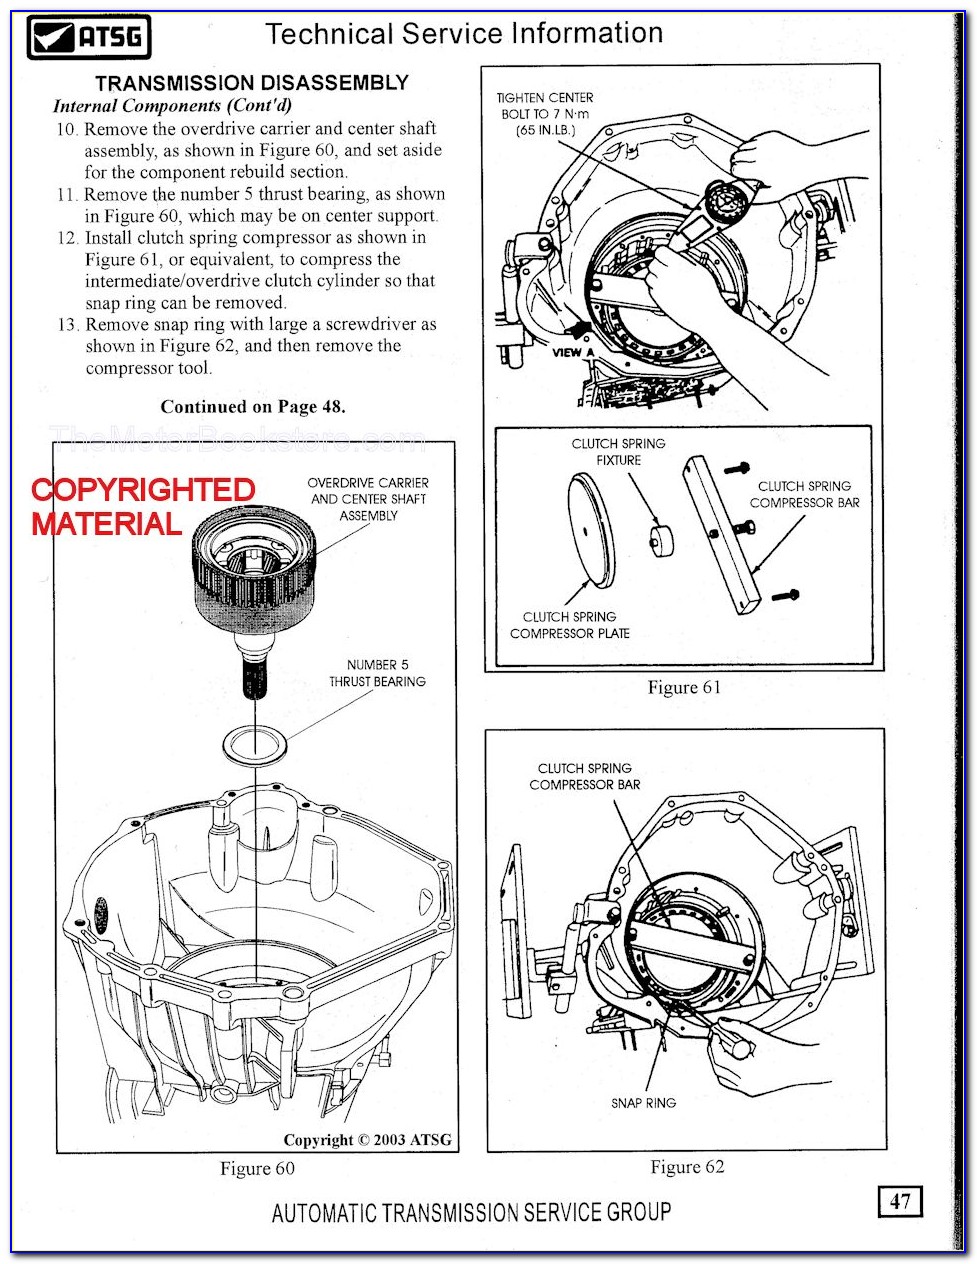 Ford E4od Transmission Parts Diagram